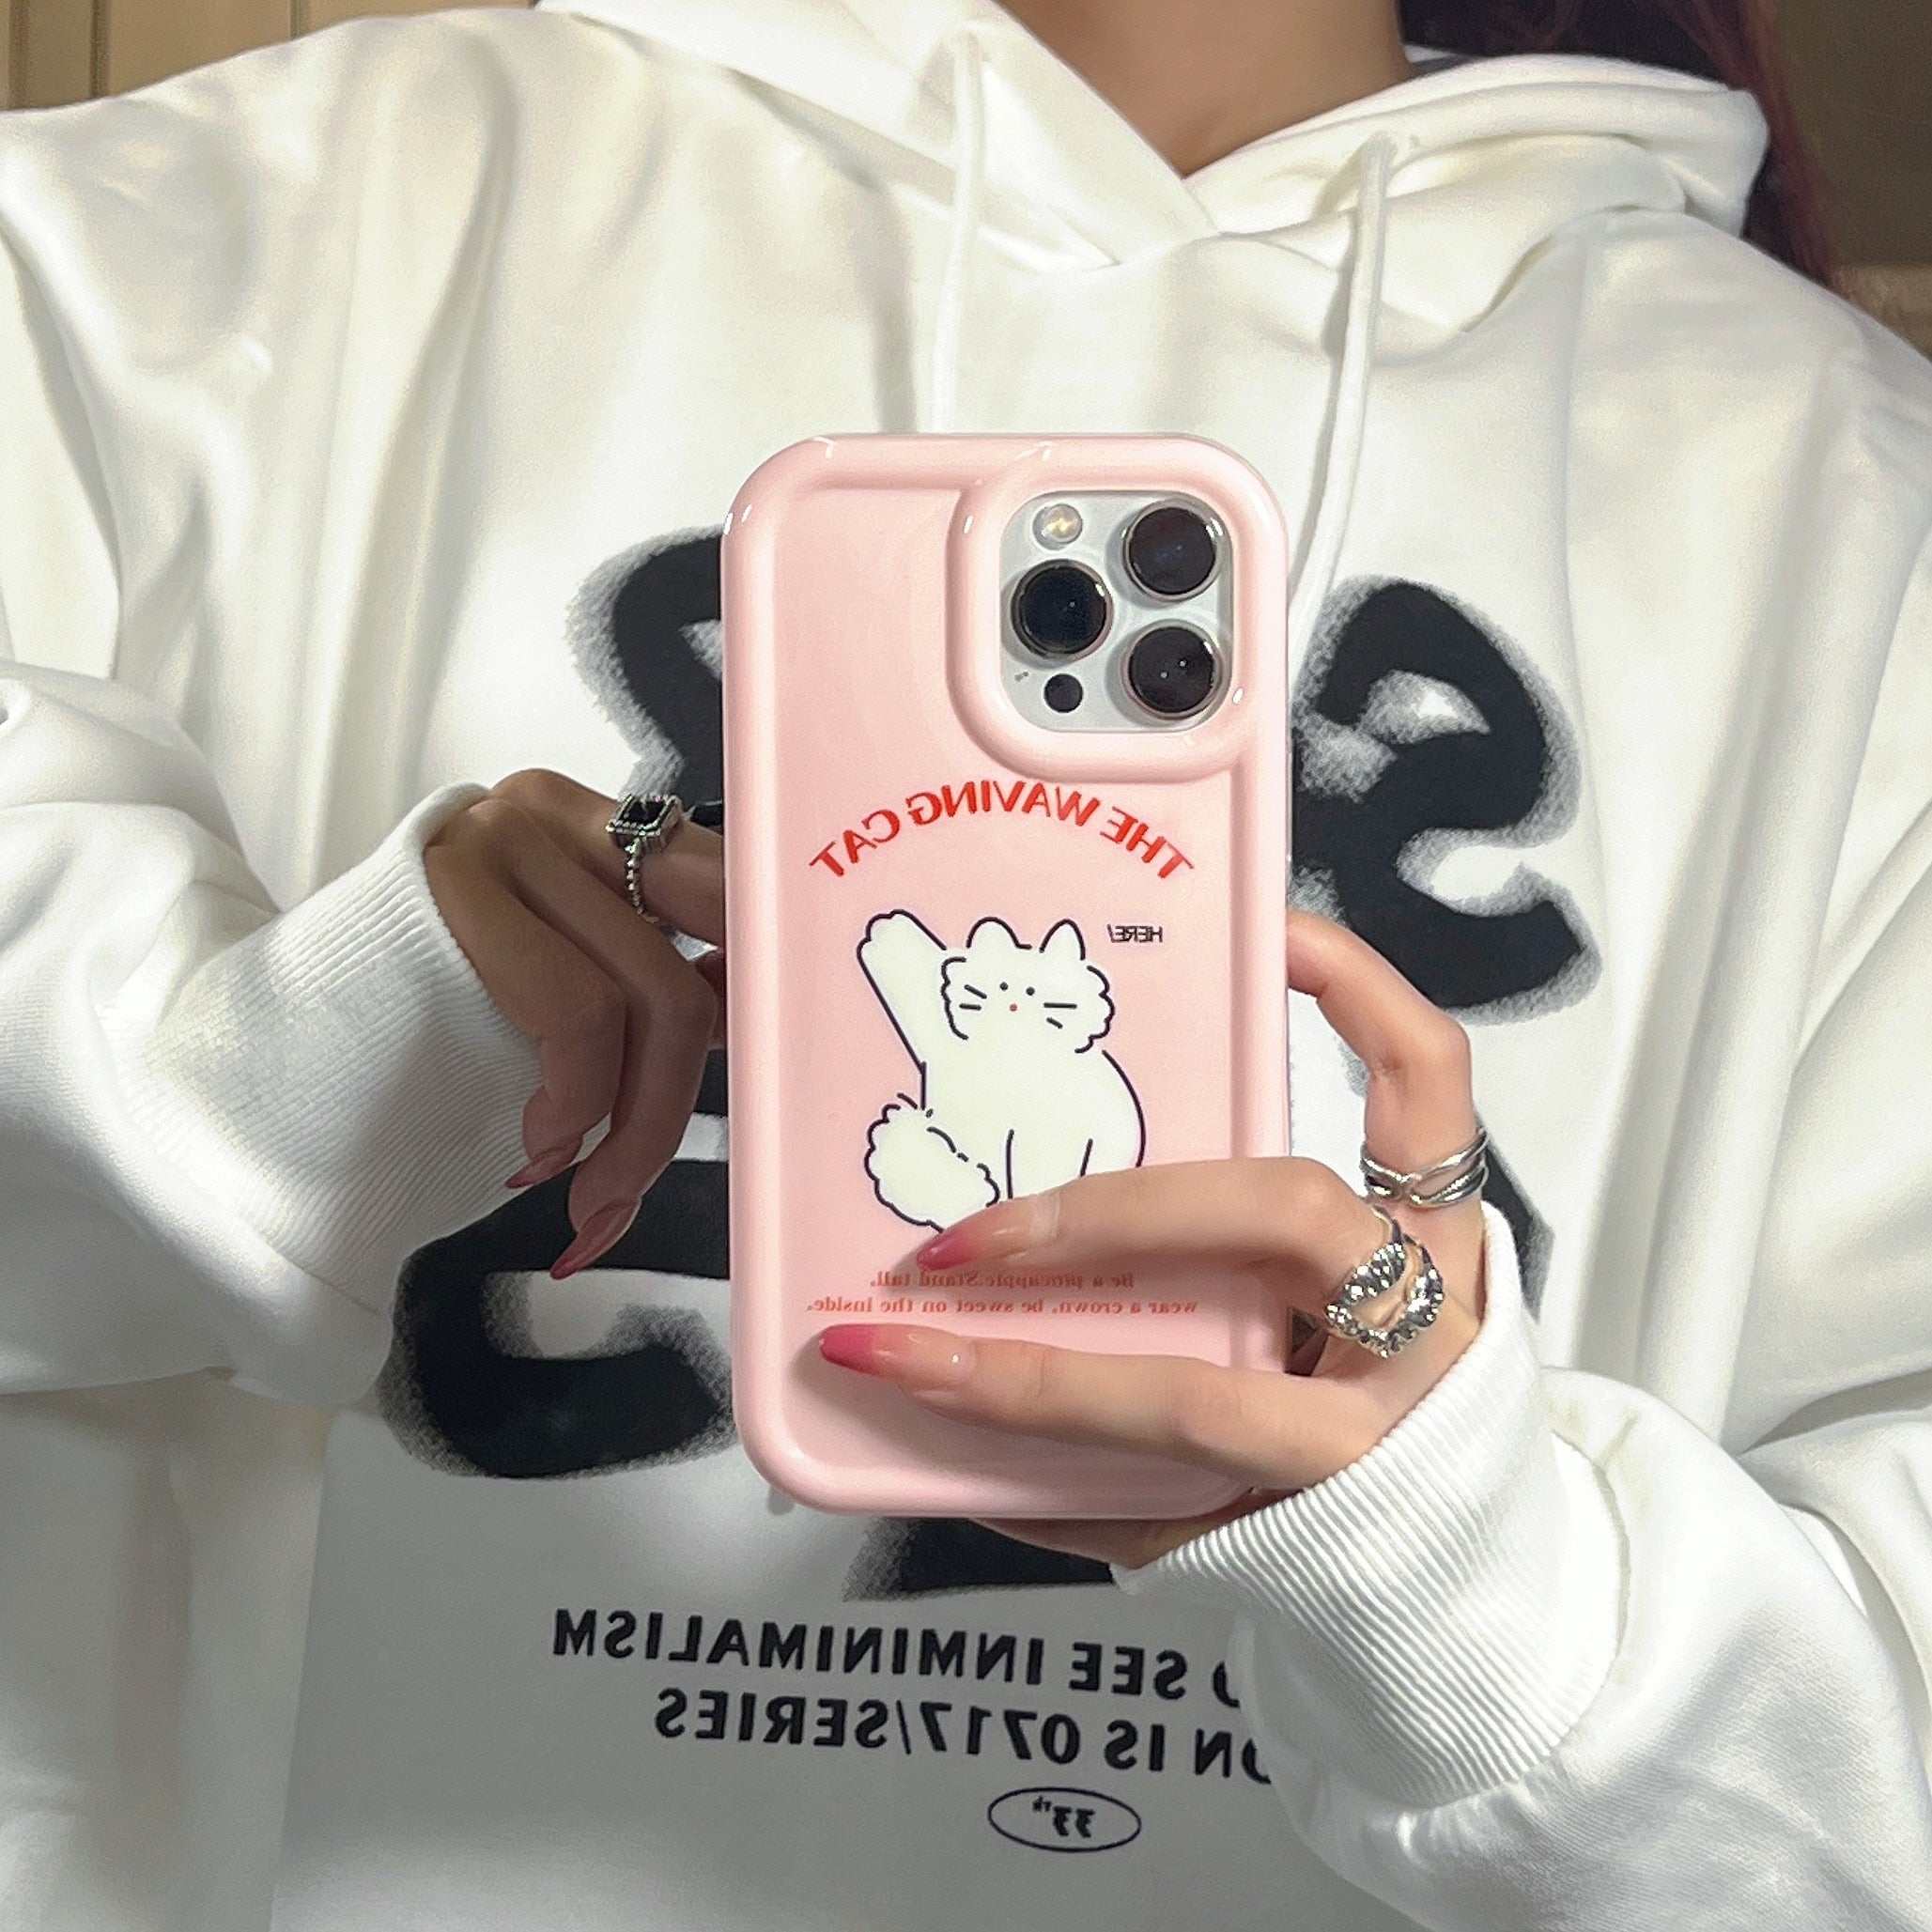 Kawaii Pink Cat iPhone Case - Cat Phone Case